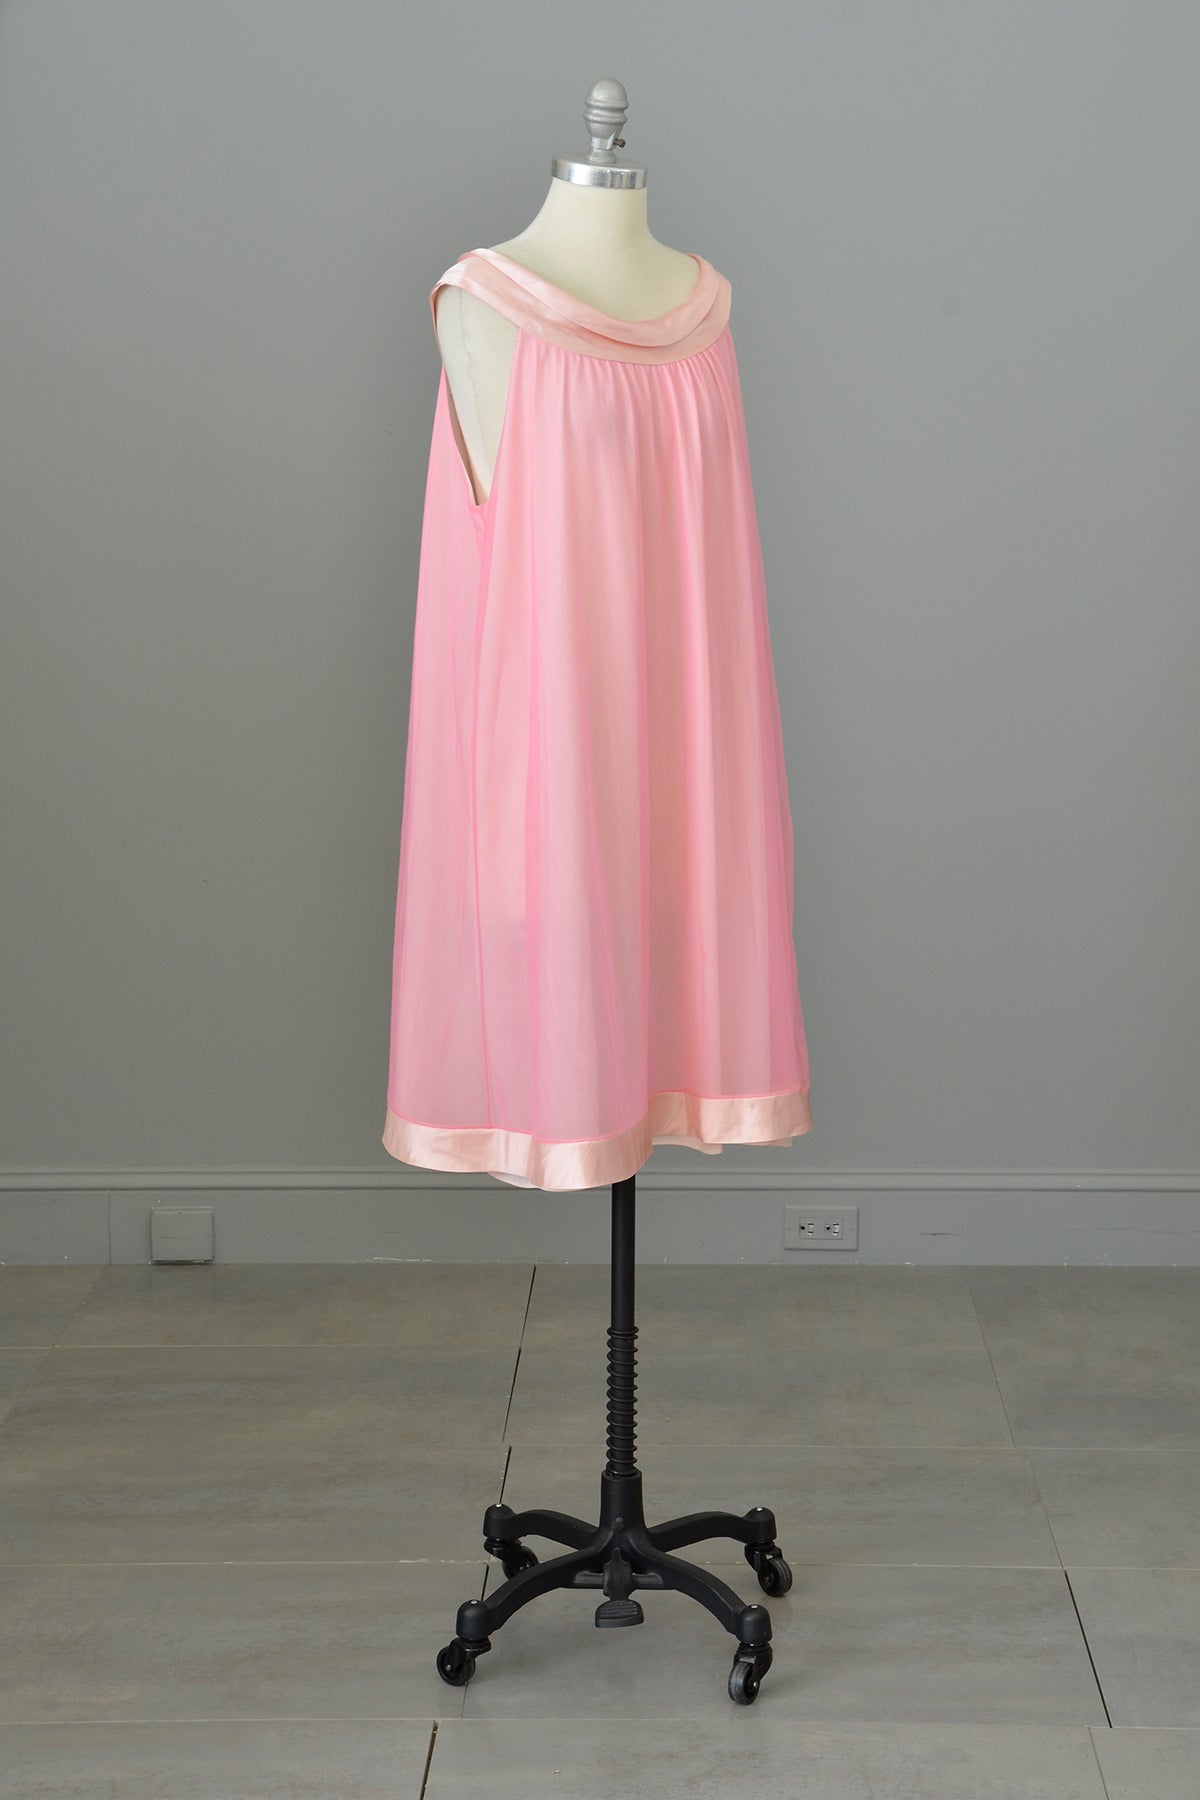 1960s Mod Hot Pink Nightie with Satin Drape